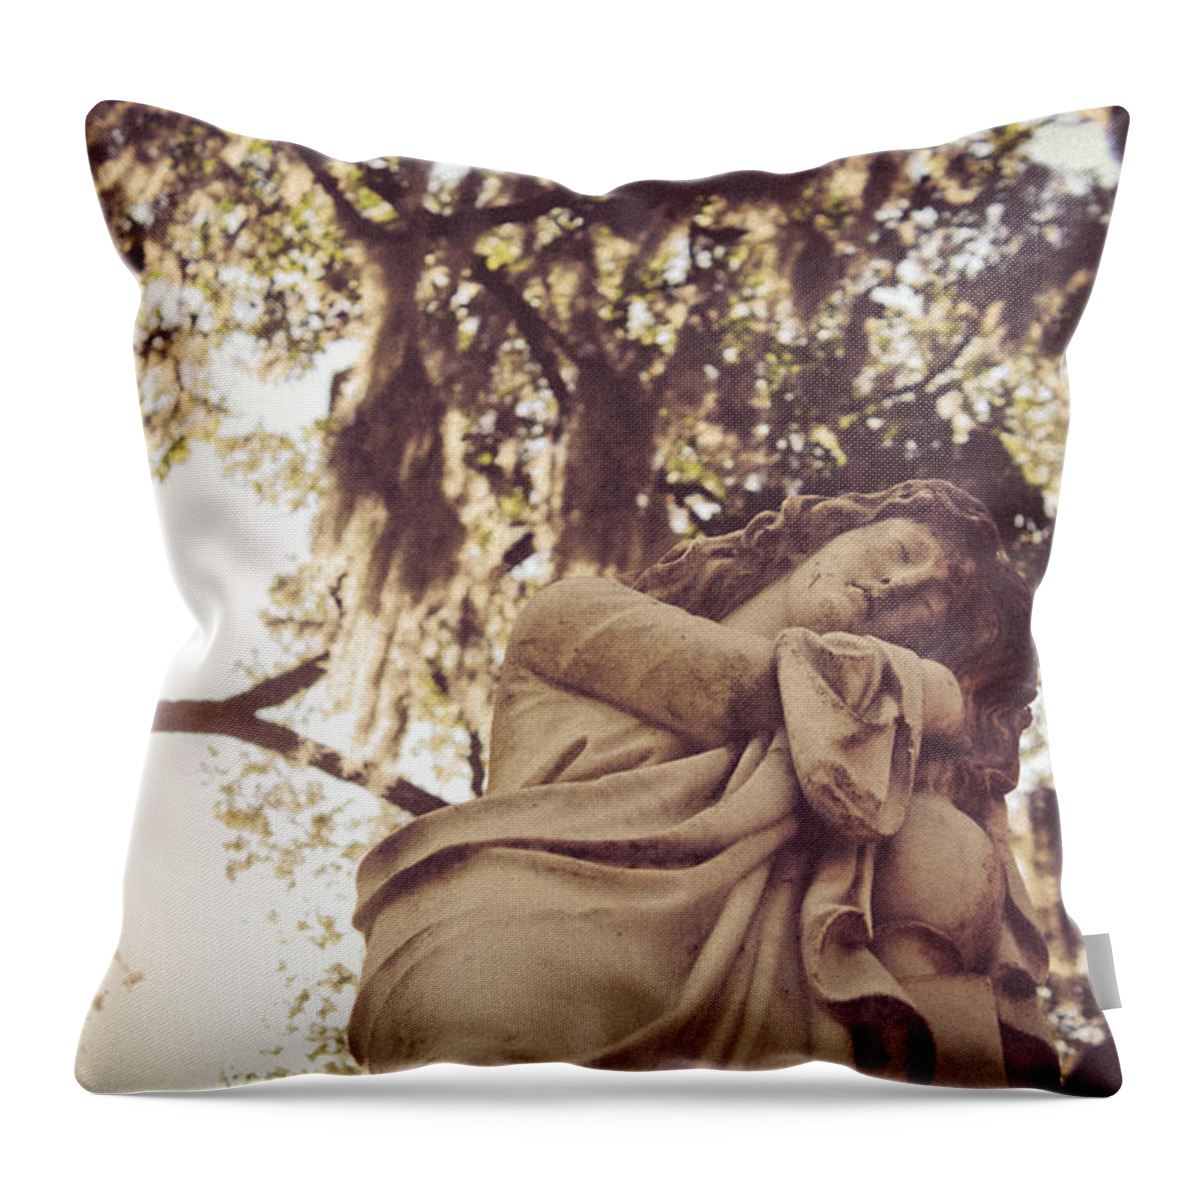 Bonaventure Throw Pillow featuring the photograph Bonaventure by Jessica Brawley